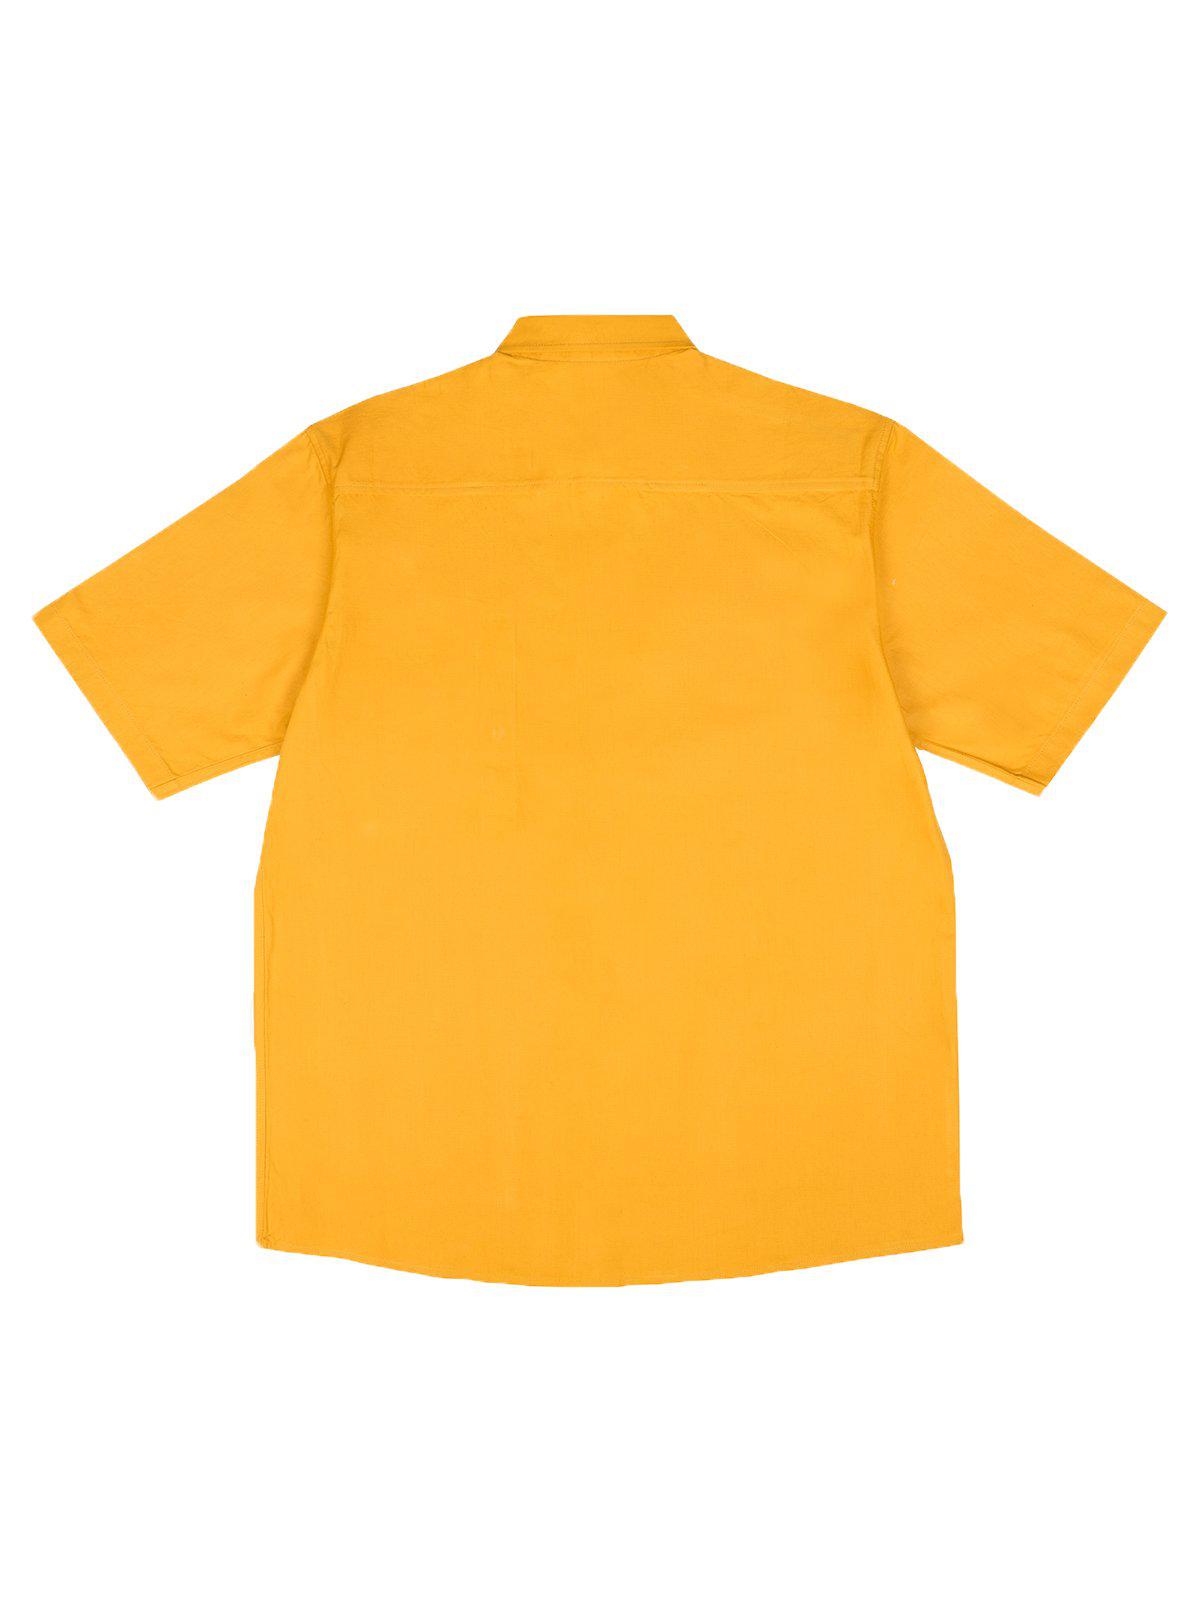 Contentment. Joy Mustard Linen Shirt - MORE by Morello Indonesia